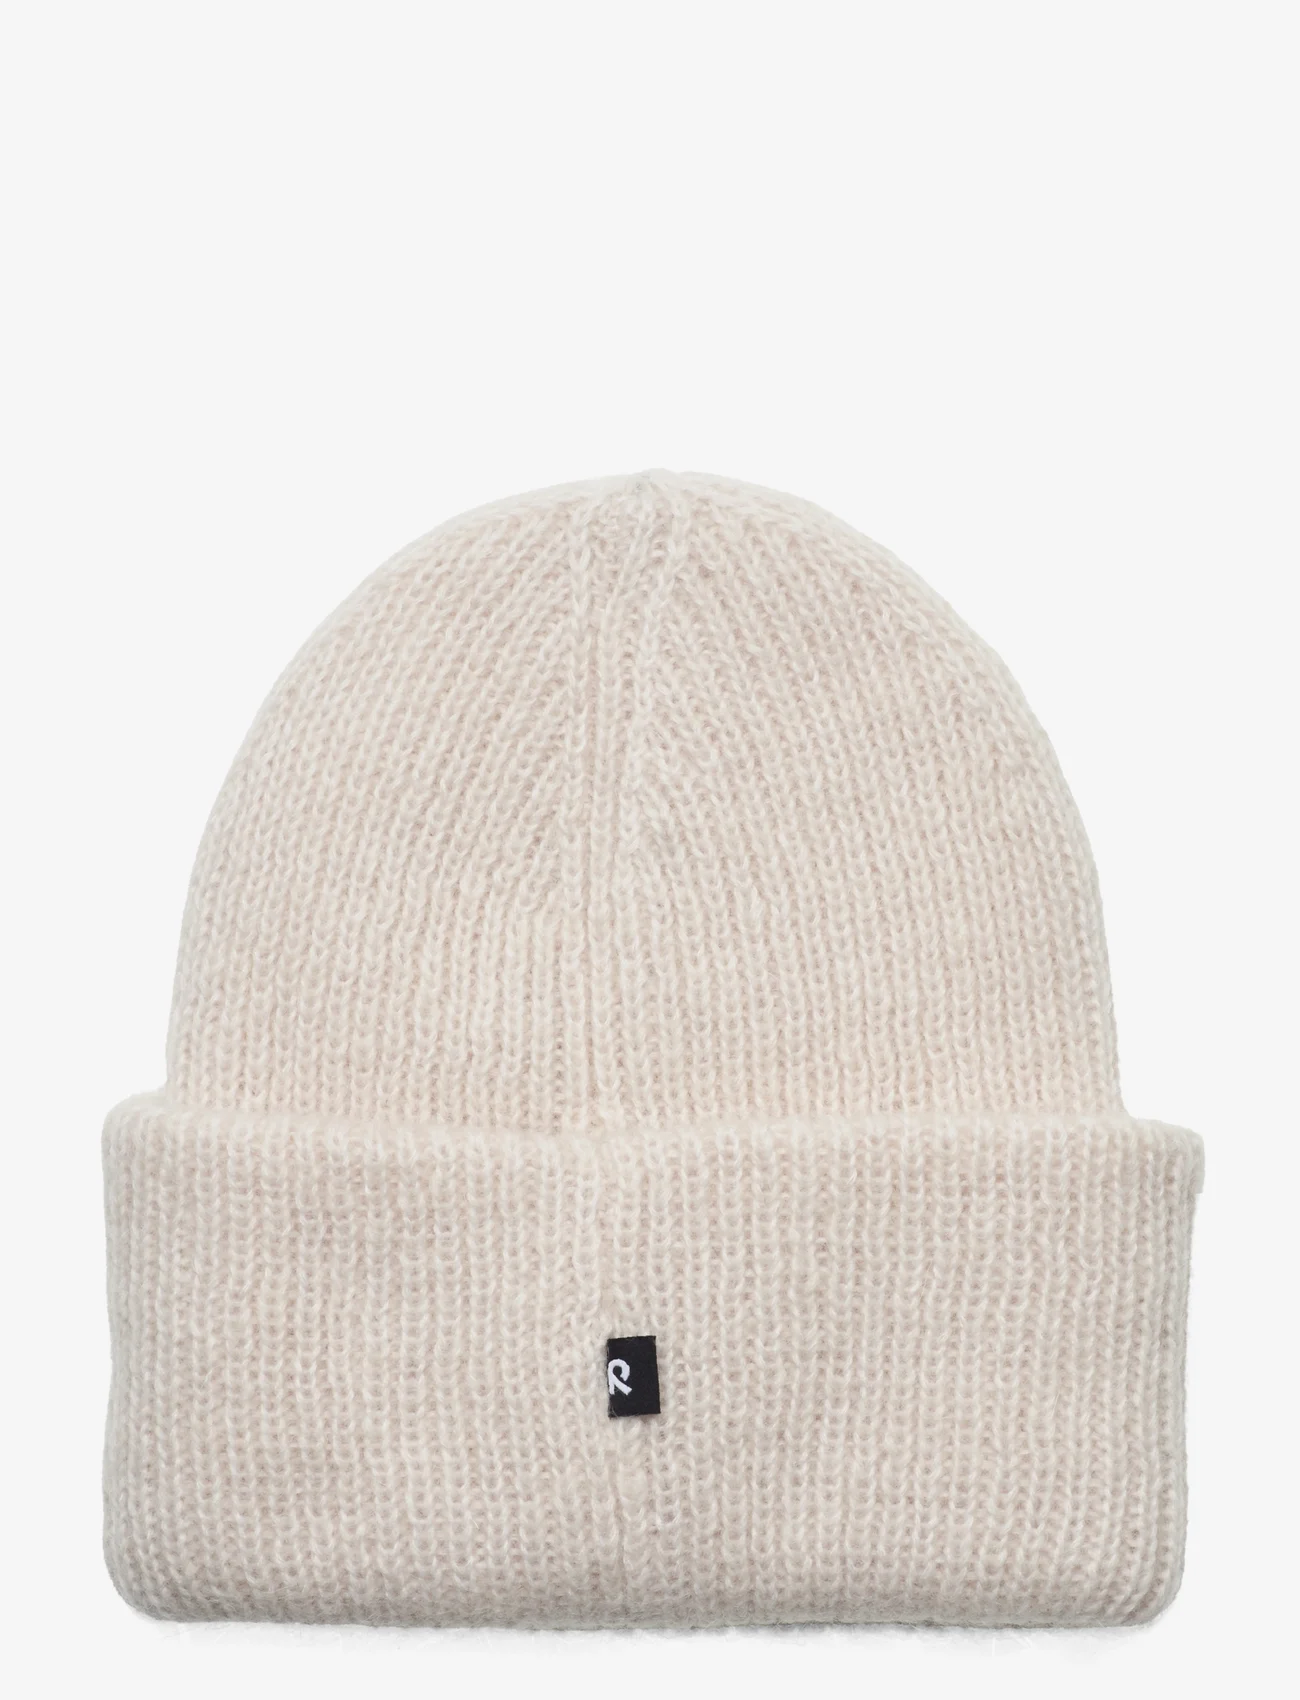 Reima - Beanie, Pilvinen - winter hats - light beige - 1